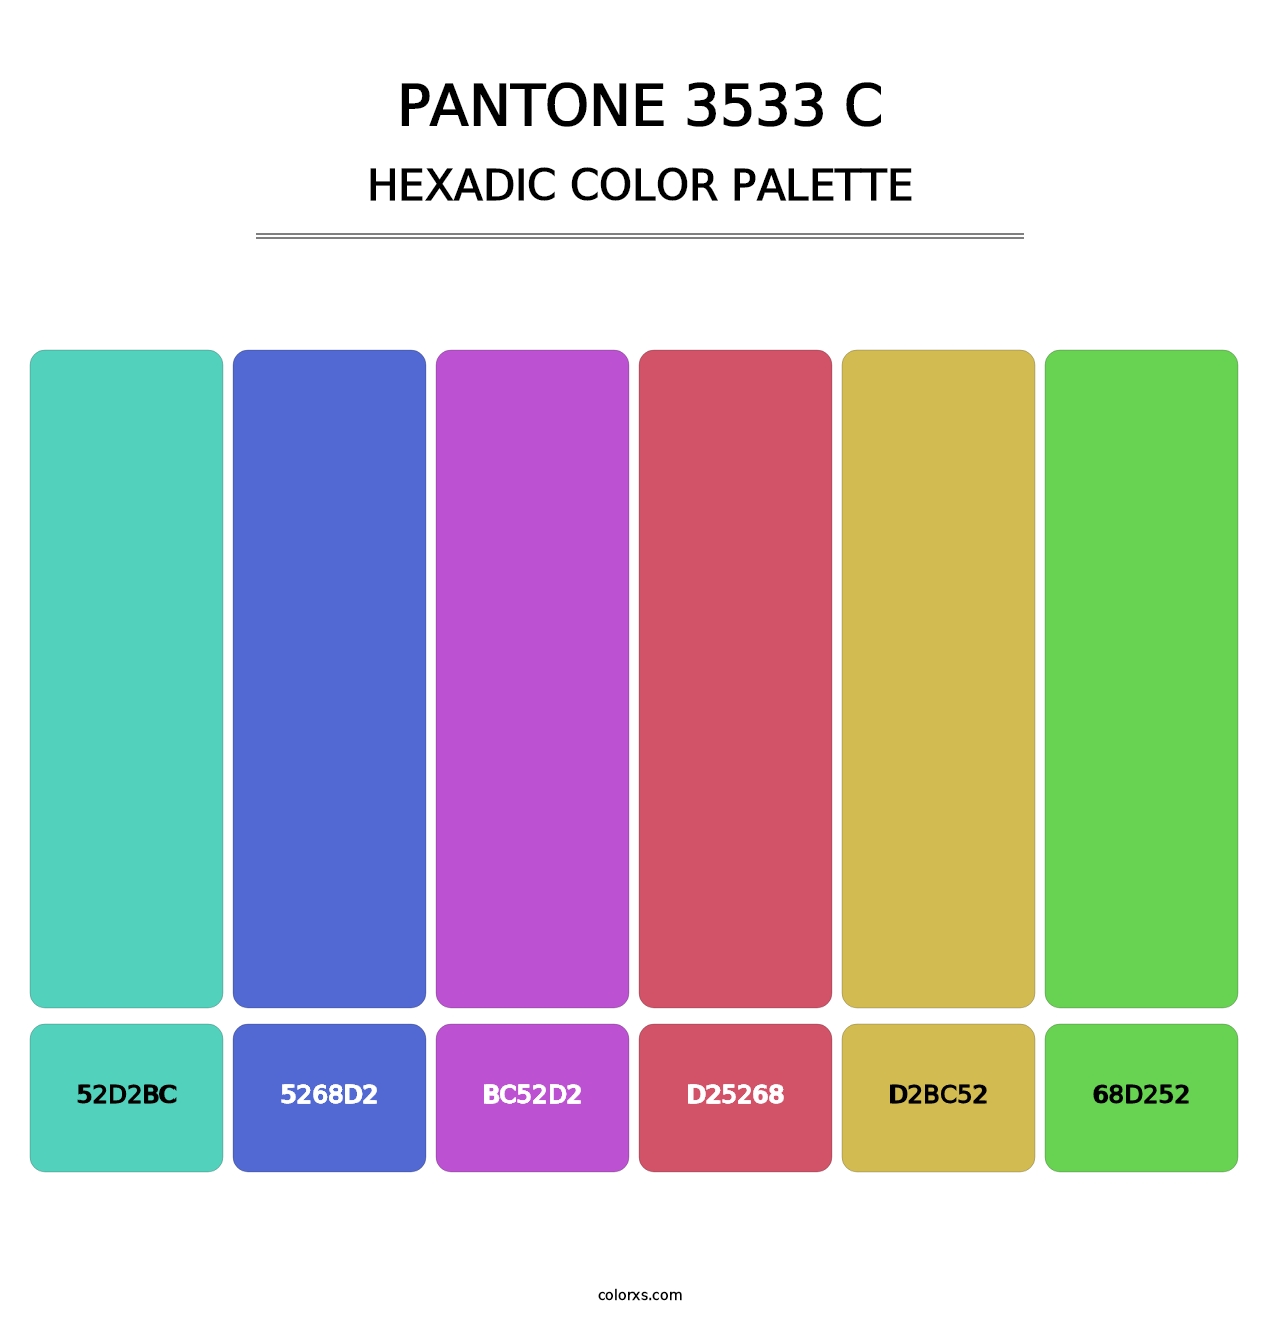 PANTONE 3533 C - Hexadic Color Palette